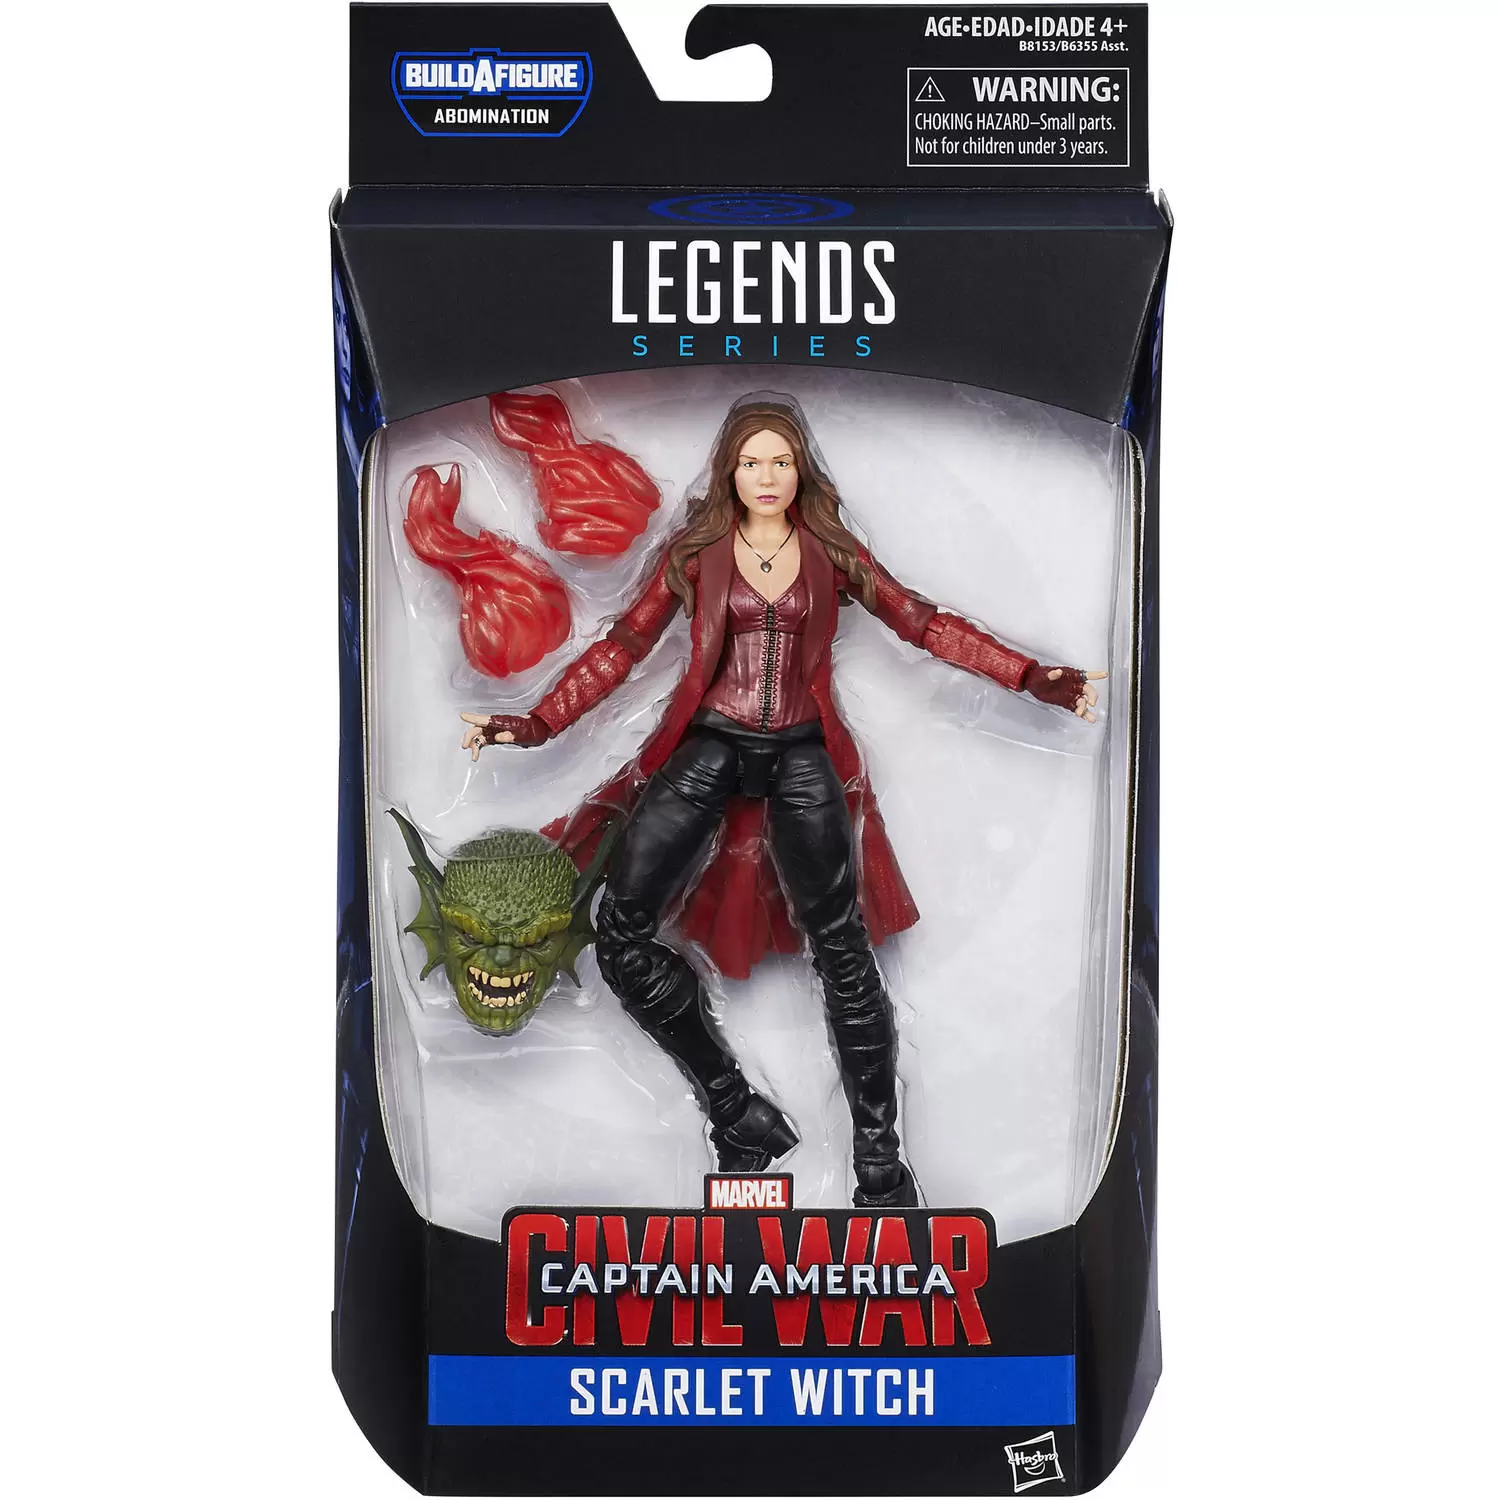  Marvel Legends Series Scarlet Witch 6-inch Retro